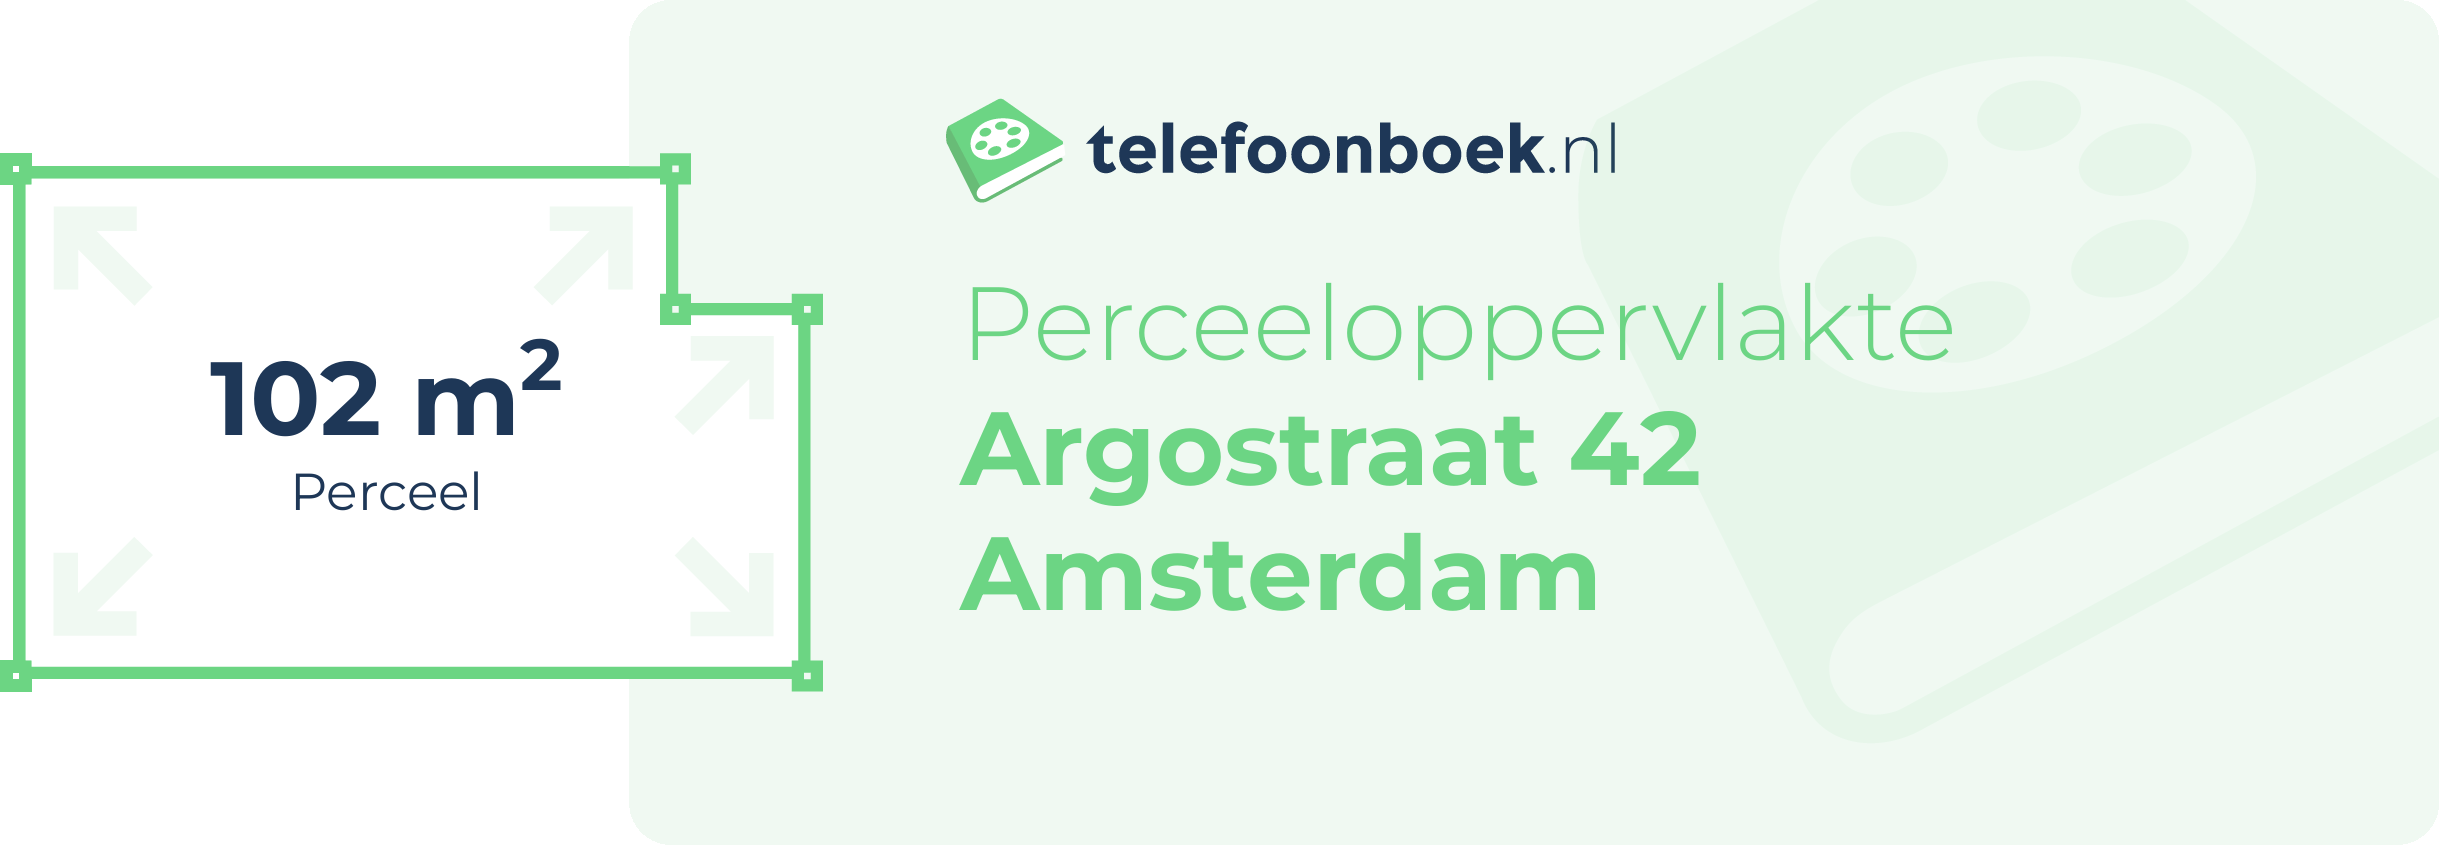 Perceeloppervlakte Argostraat 42 Amsterdam